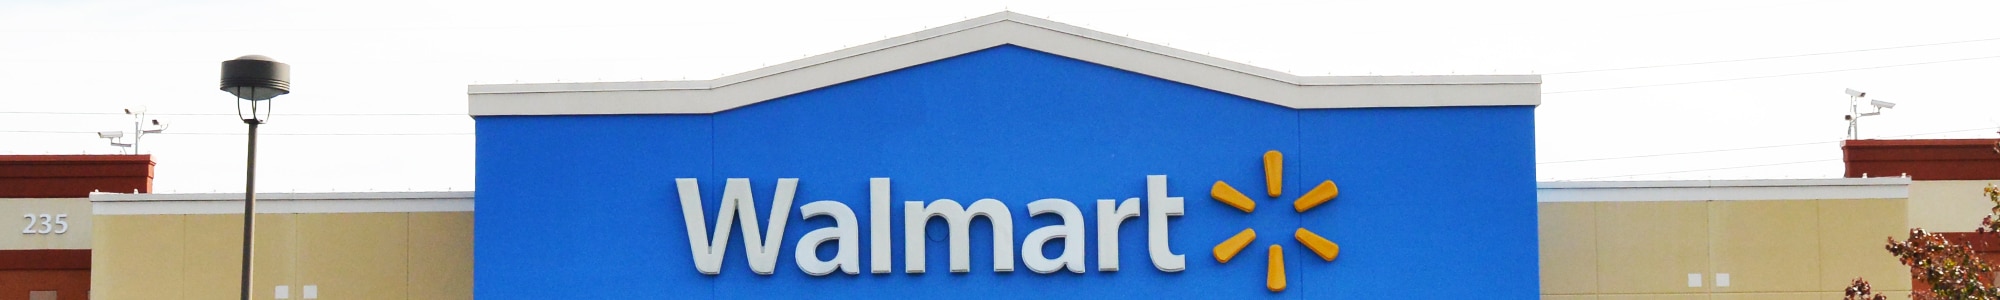 Walmart banner image